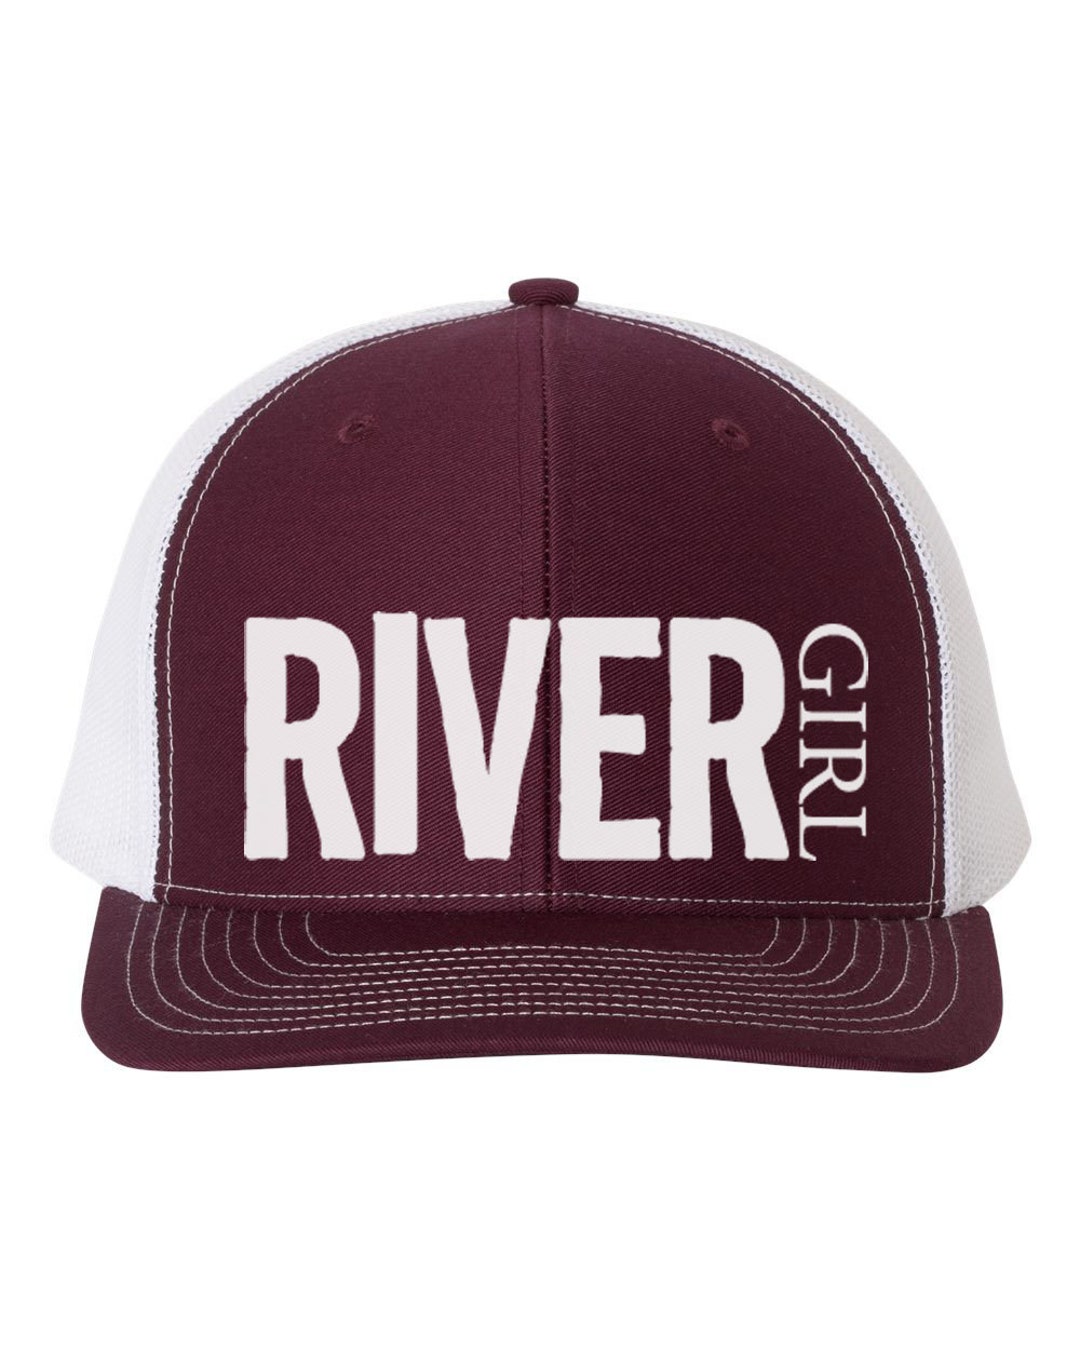 River Girl, River Girl Hat, Fishing Cap, Float Trip Hat, Snapback, Gift for  Her, River Apparel, River Hat, Trucker Hat, Floating, White Text -   Ireland